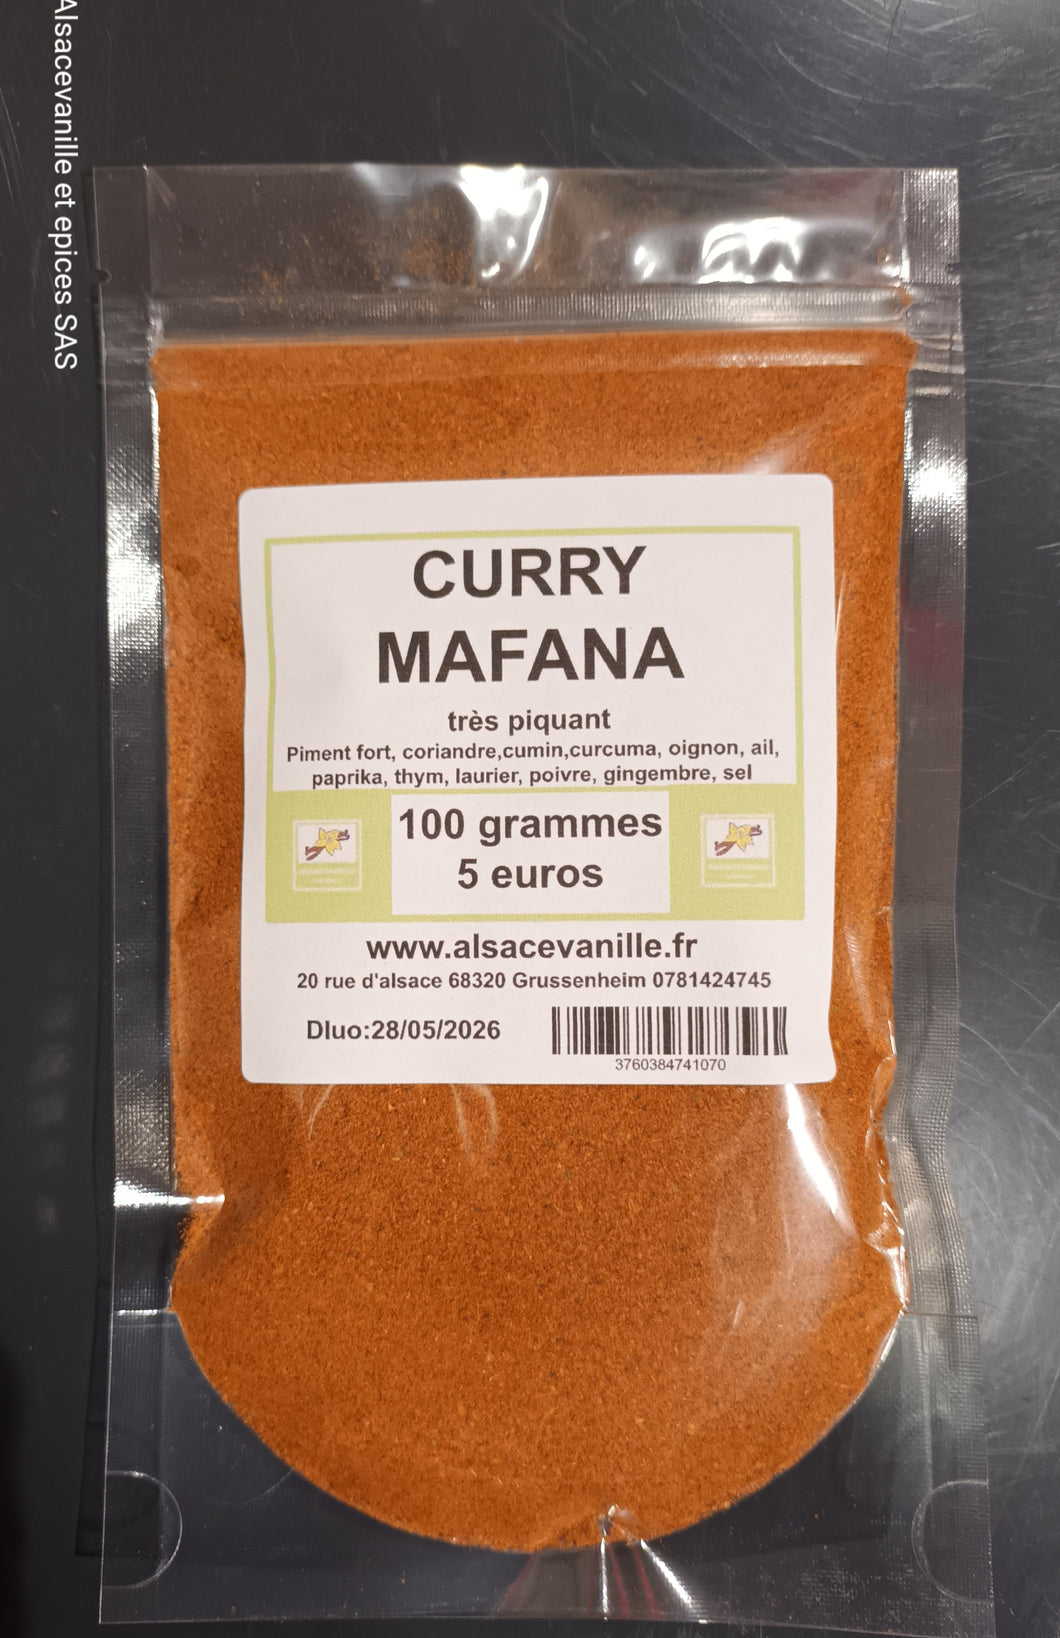 Curry Mafana tres piquant 100 grammes